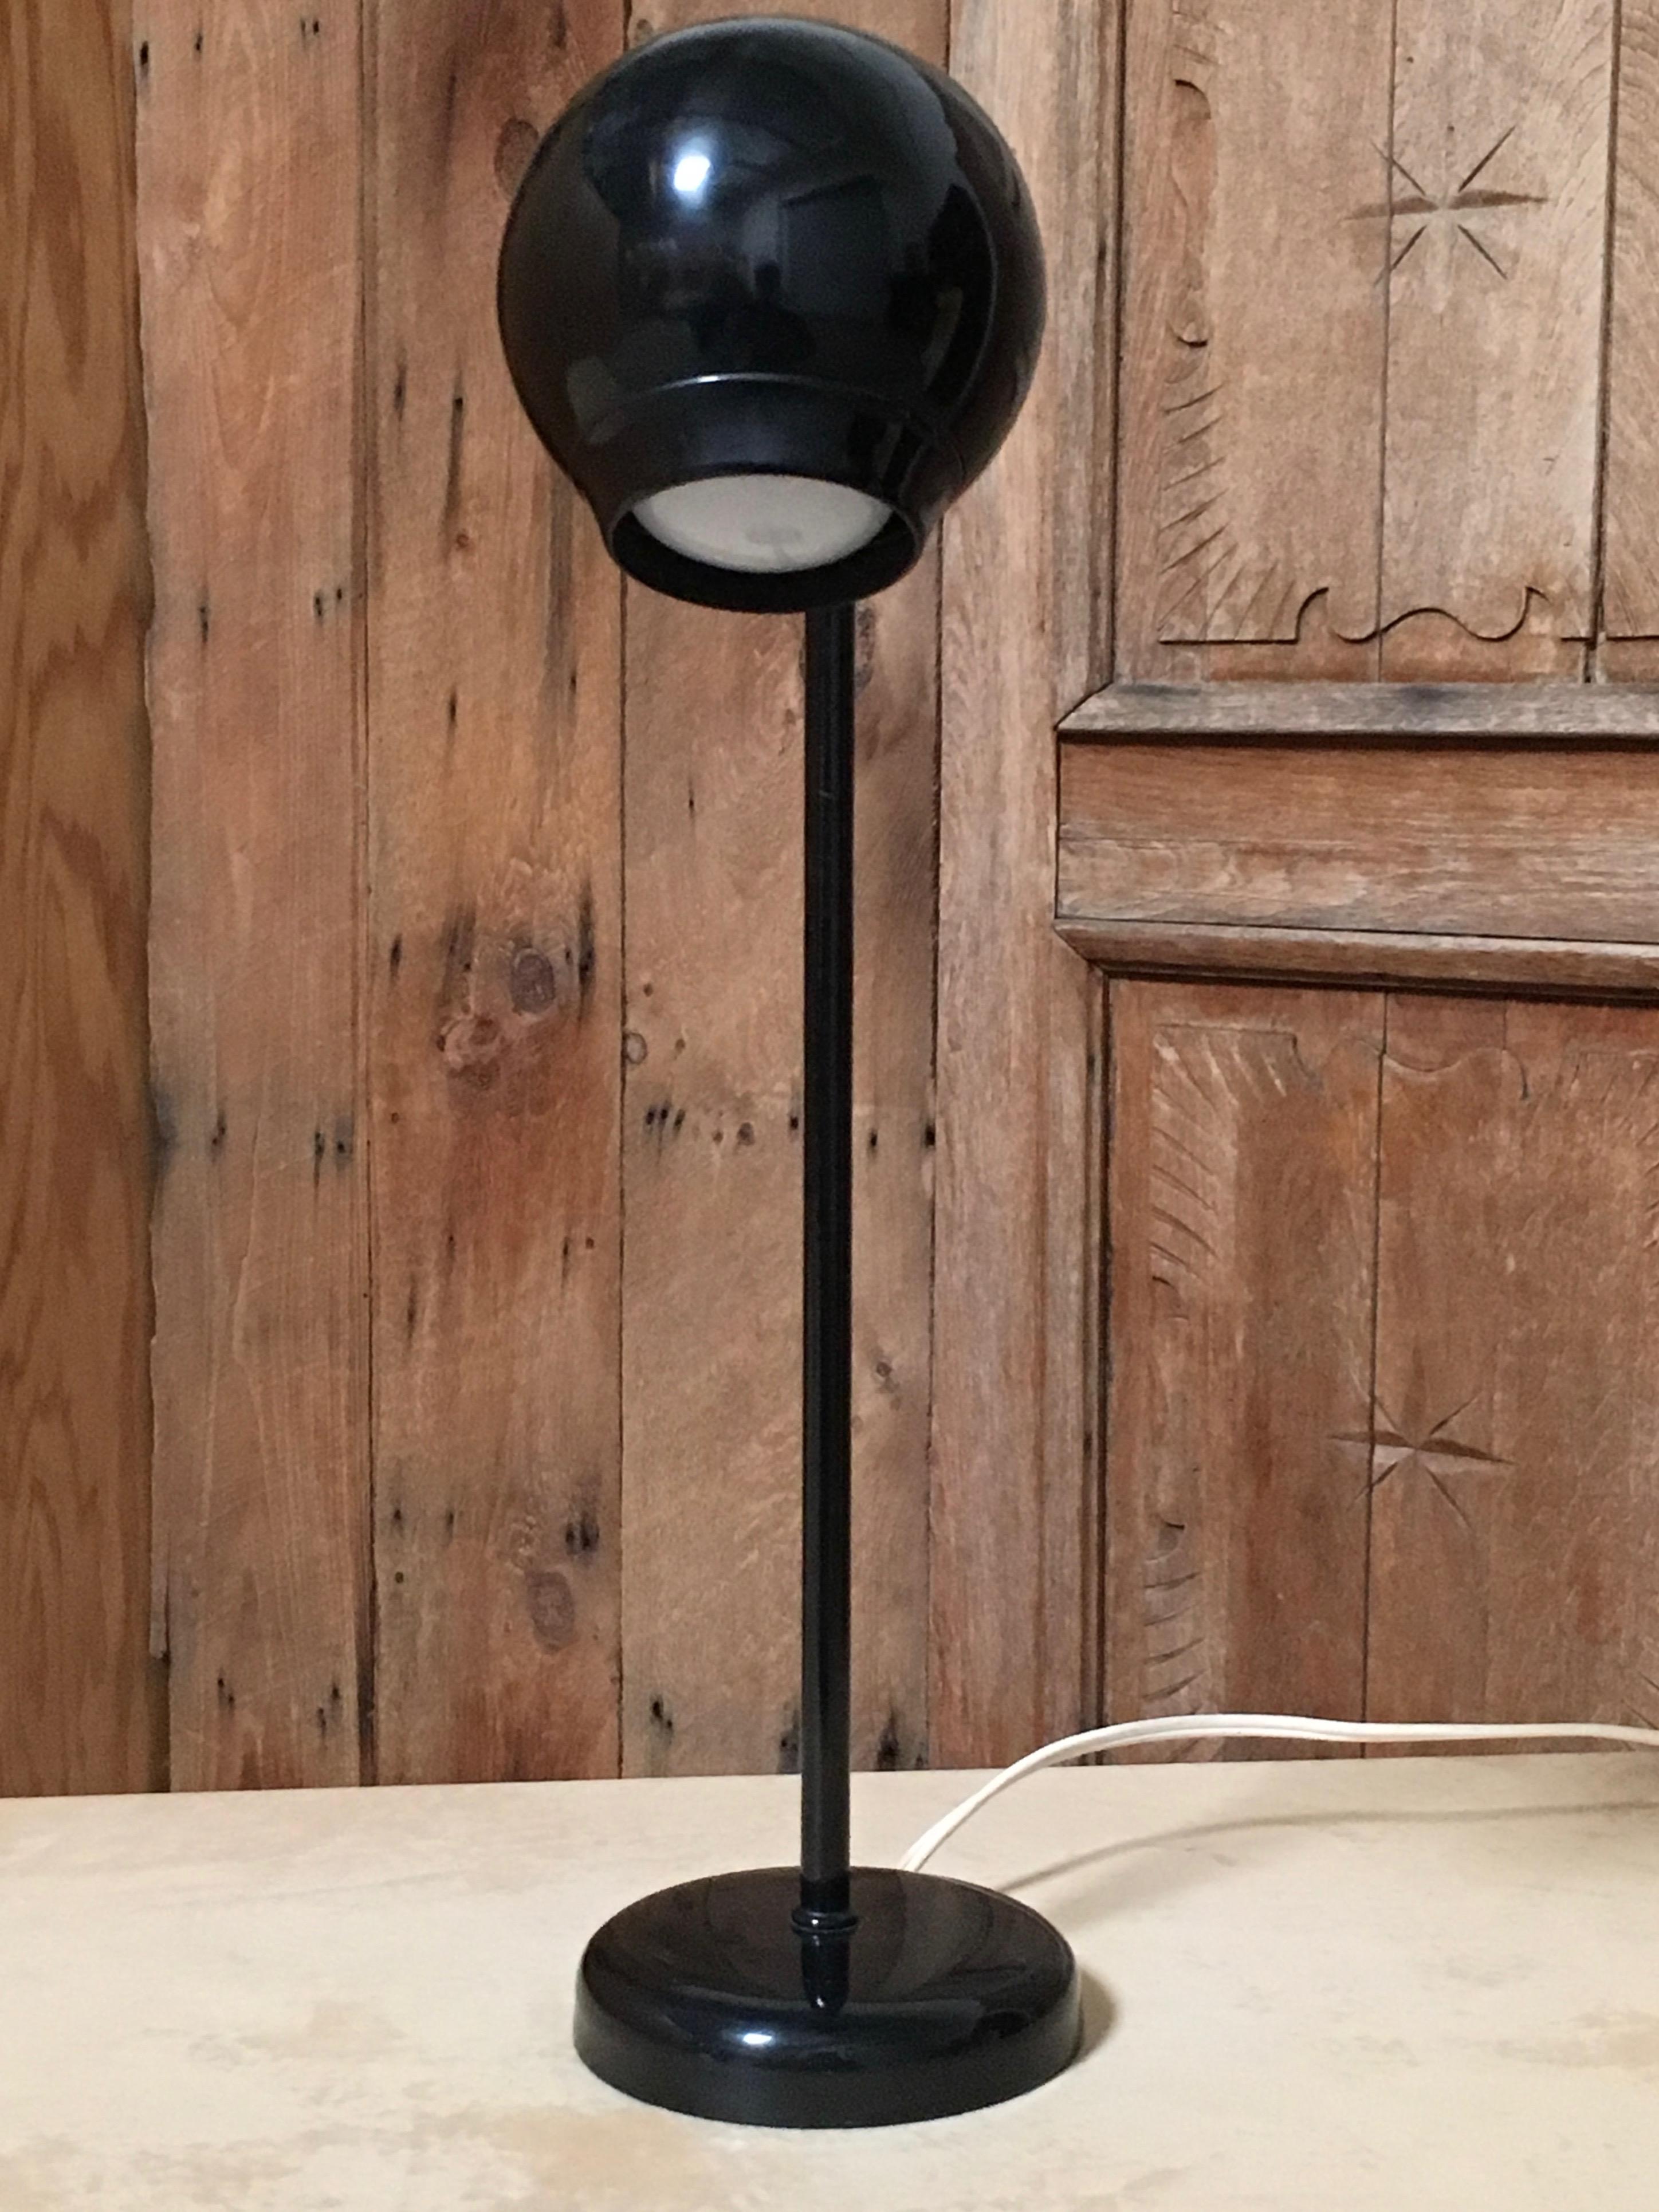 North American Eyeball Desk Lamp by Robert Sonneman for George Kovacs For Sale